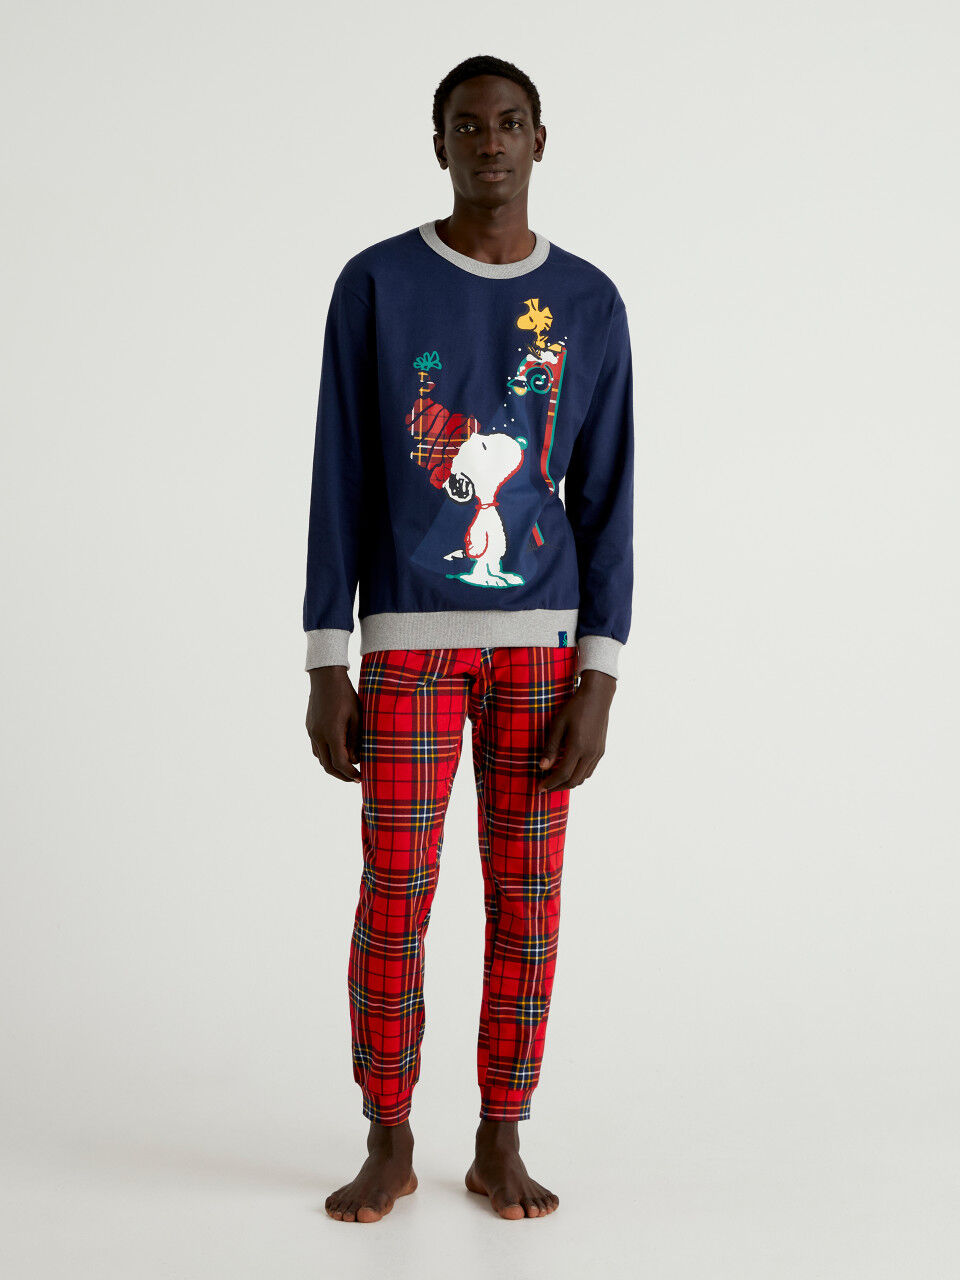 Snoopy pyjamas in warm cotton